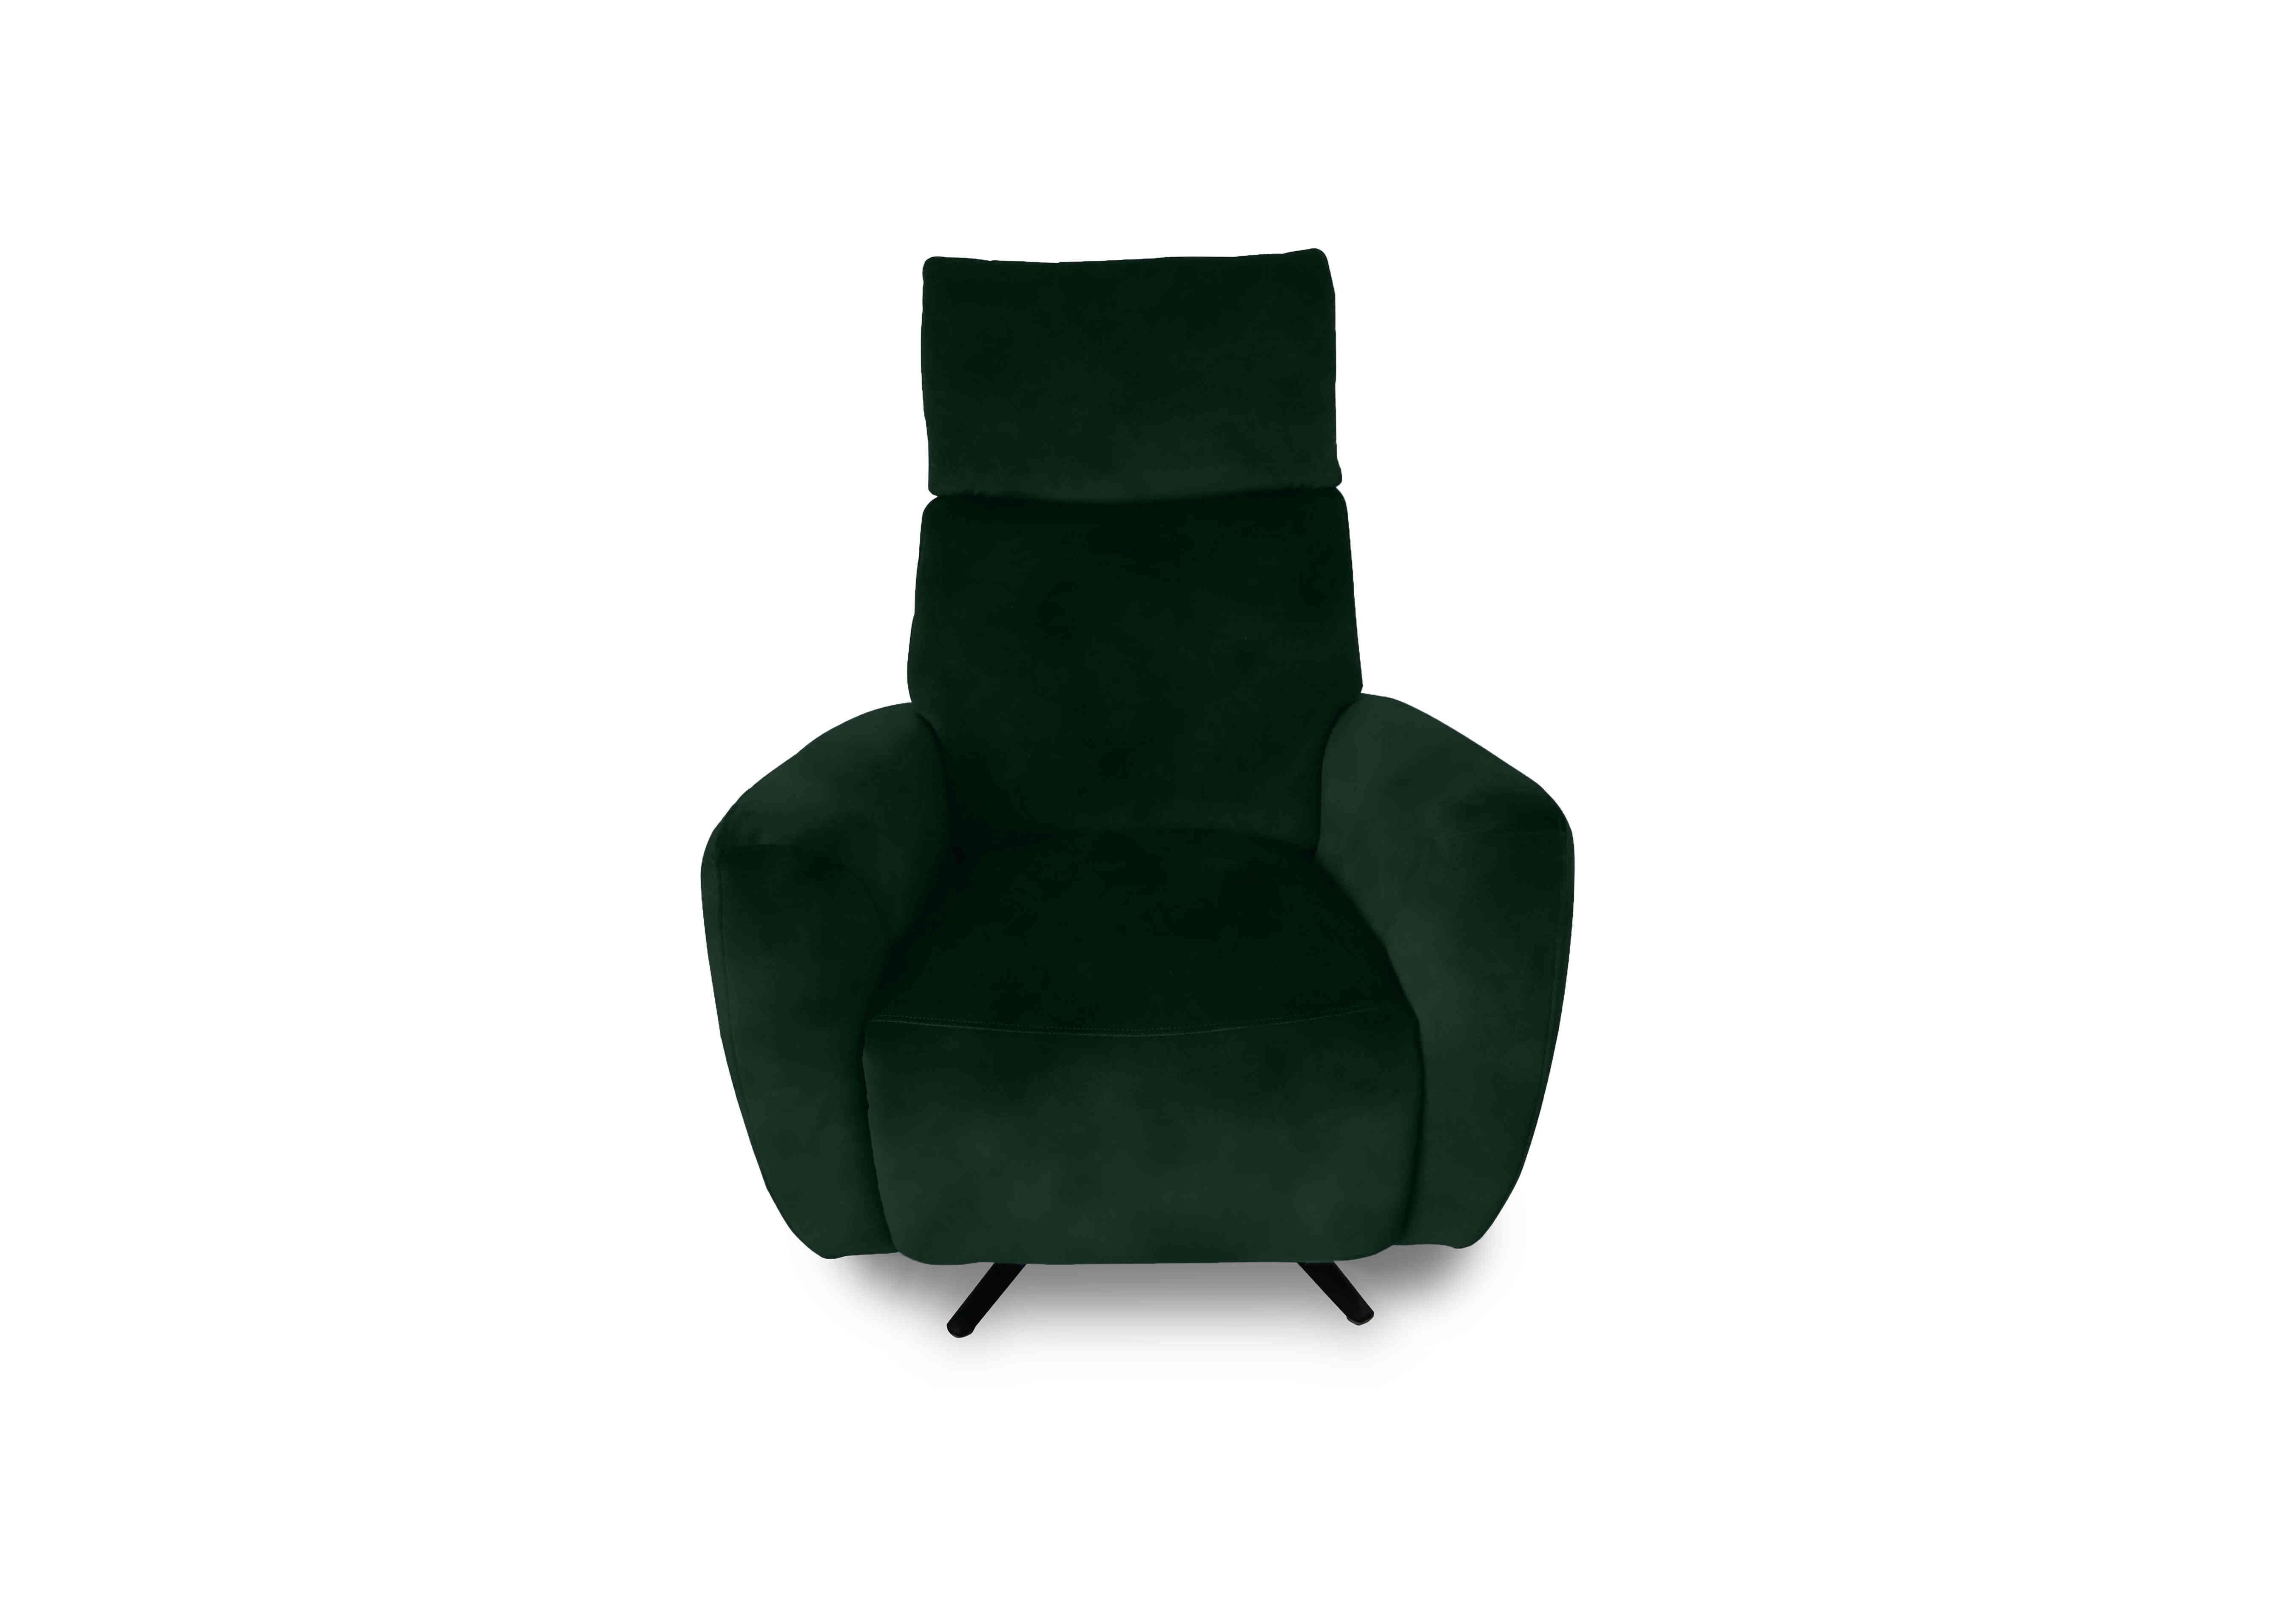 Designer Chair Collection Granada Fabric Power Recliner Swivel Chair with Massage Feature in Sfa-Pey-R11 Dark Green on Furniture Village